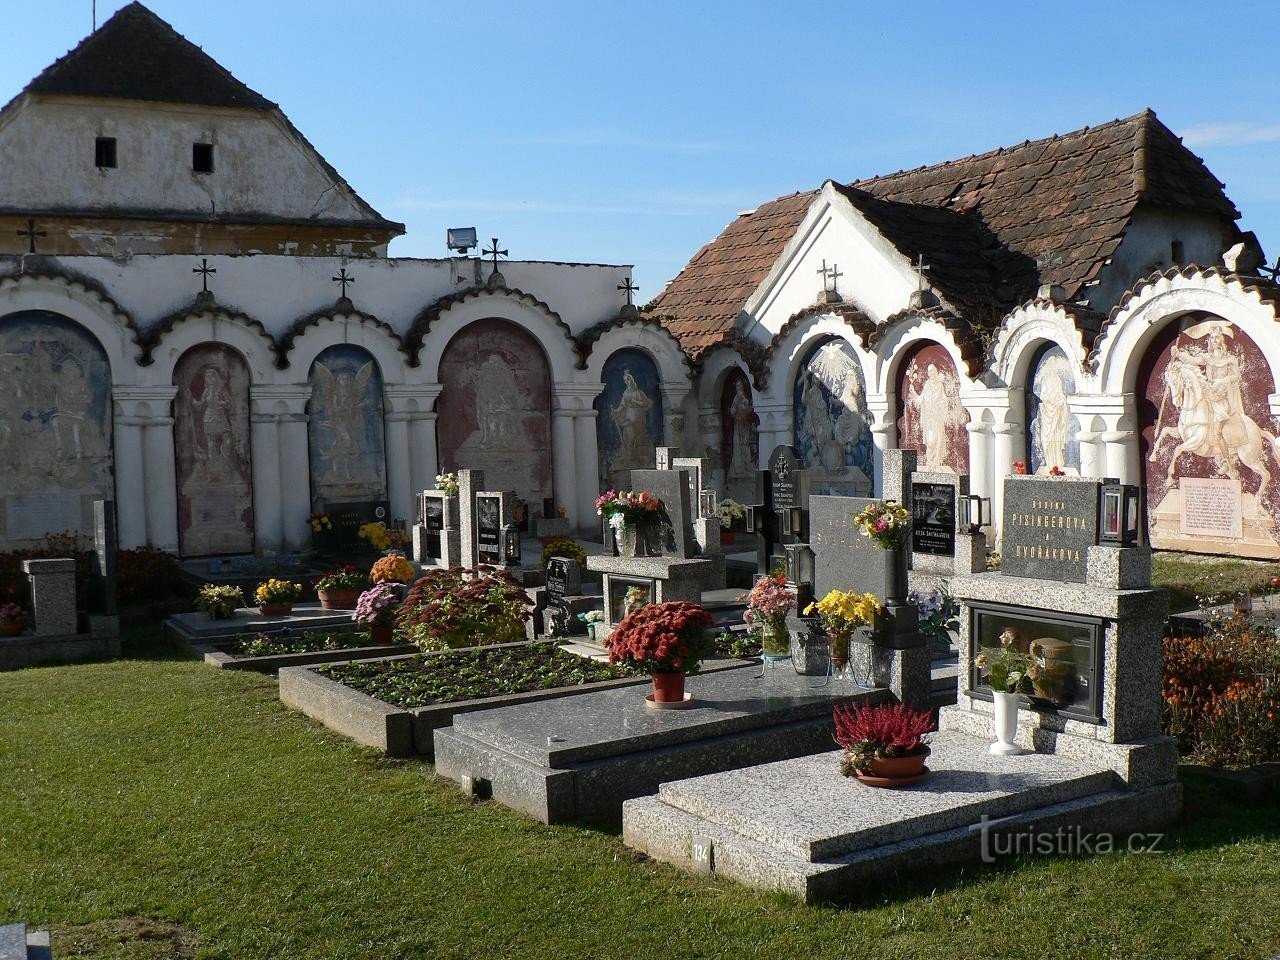 Albrechtice nad Vltavou、墓地の一角